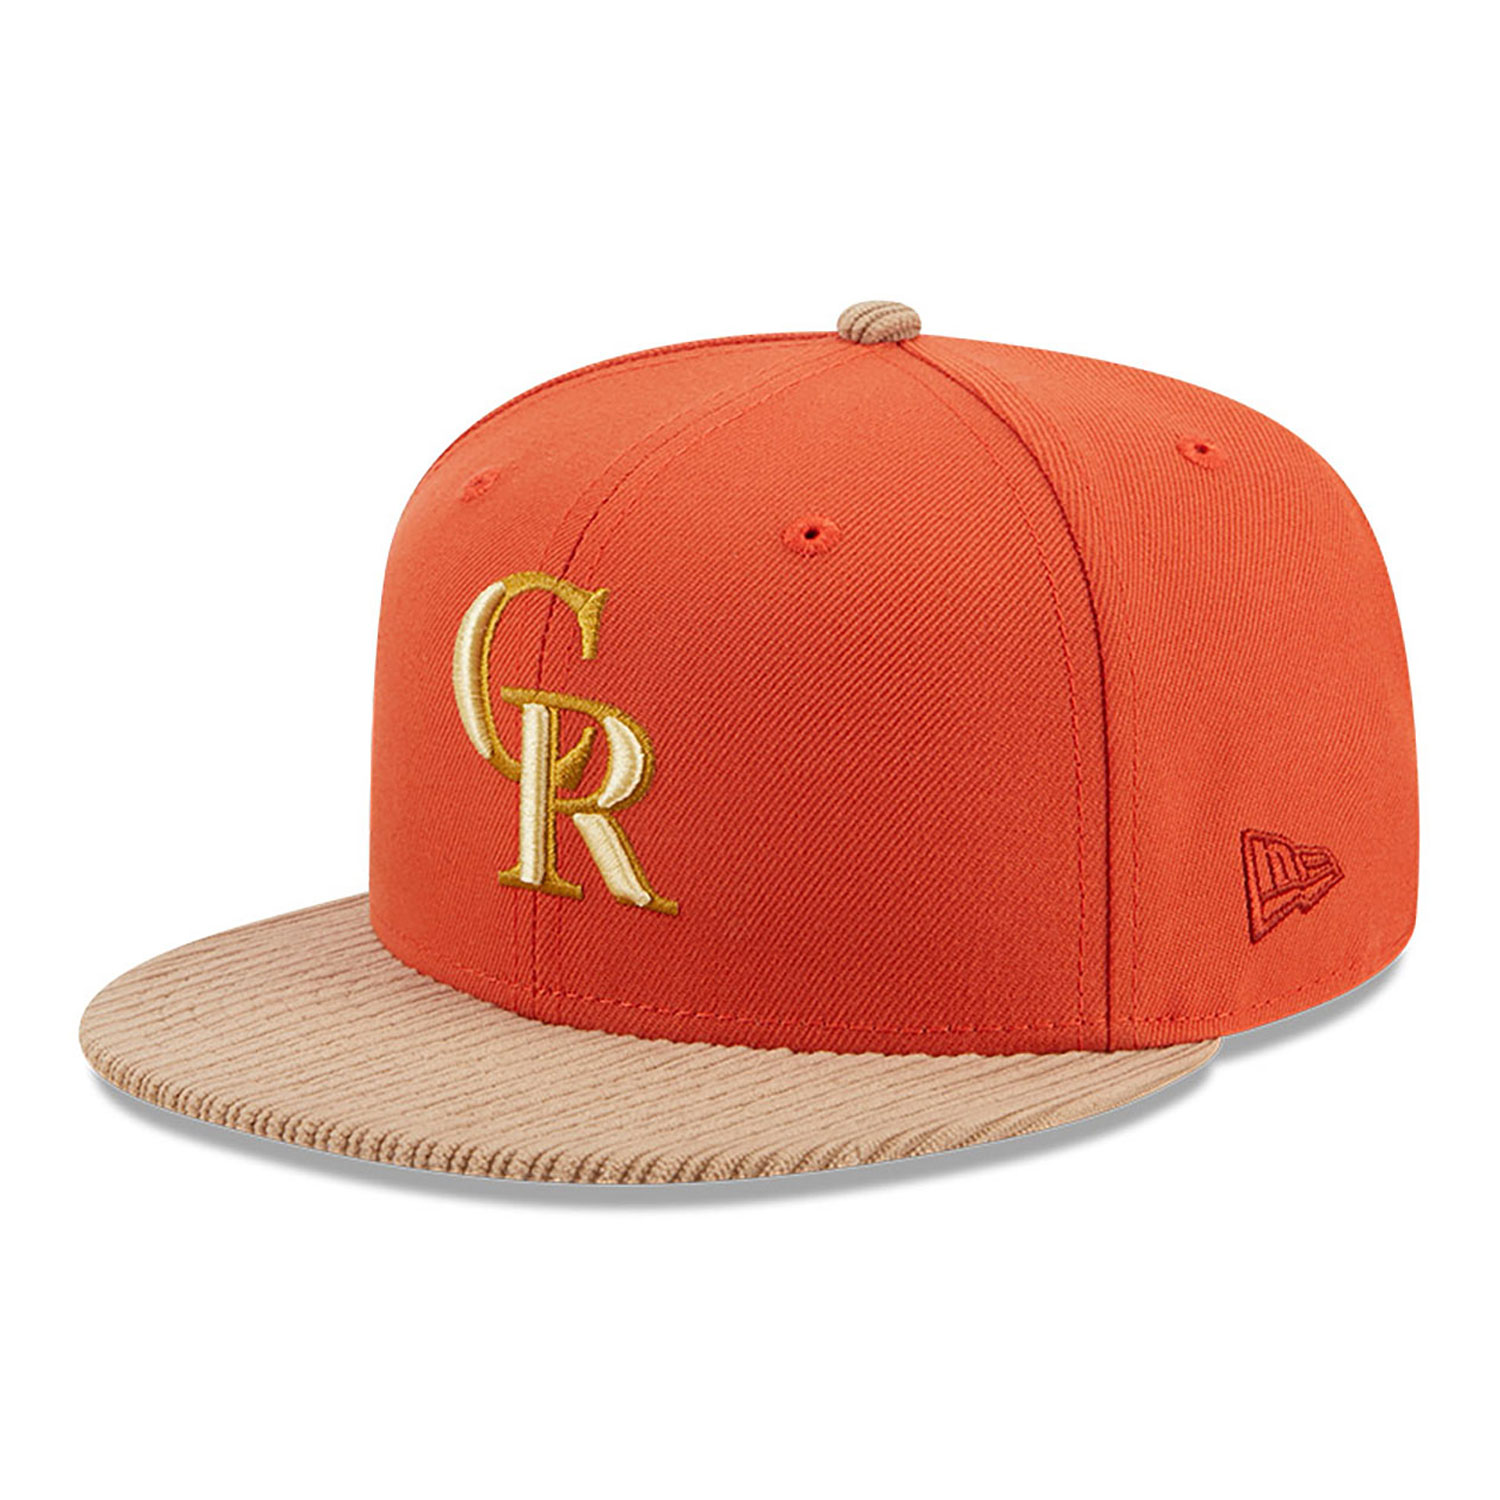 Colorado Rockies MLB Autumn Wheat Dark Orange 9FIFTY Snapback Cap